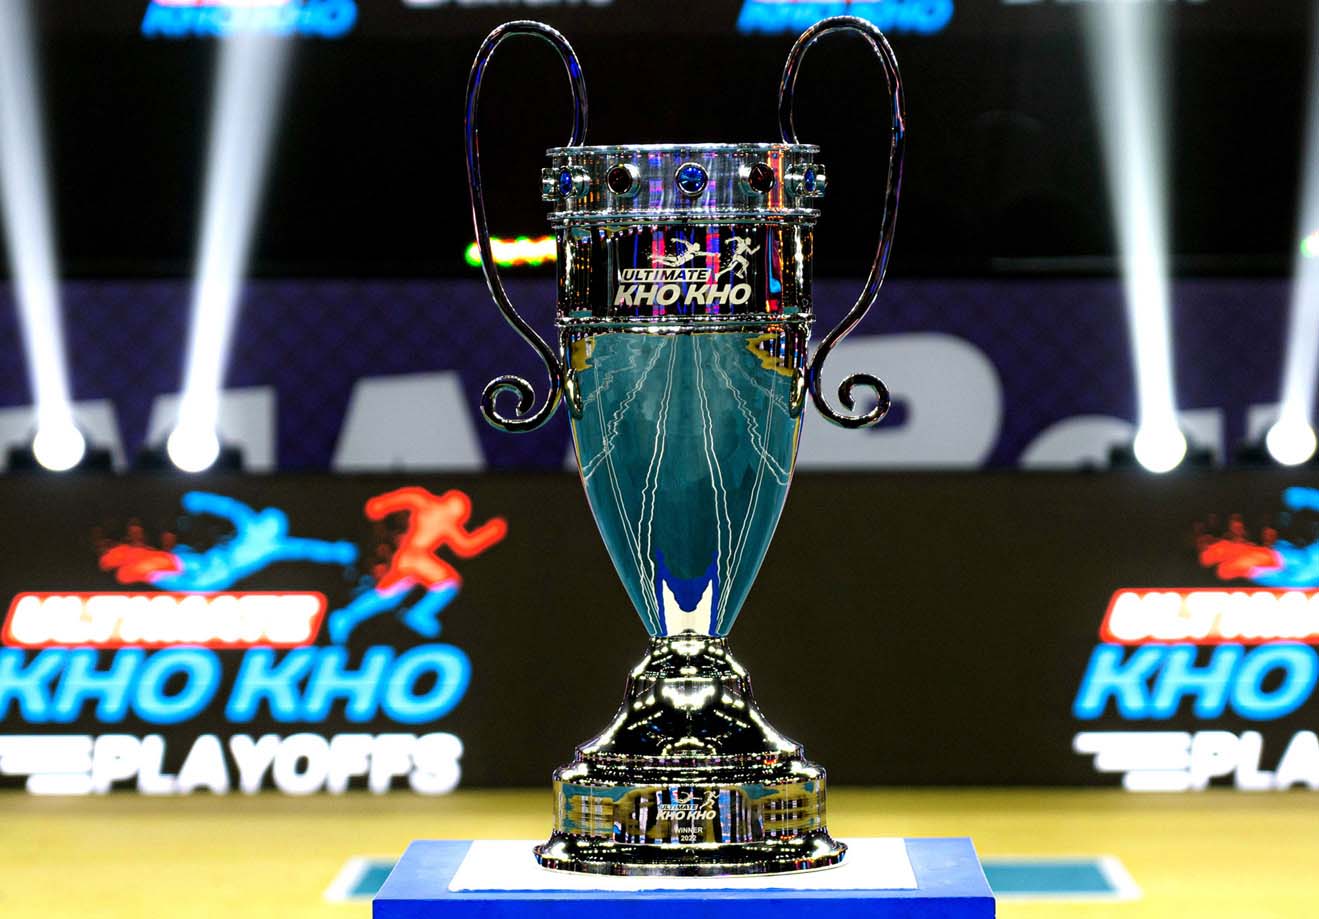 The glittering trophy of the inaugural season of the Ultimate Kho Kho League.